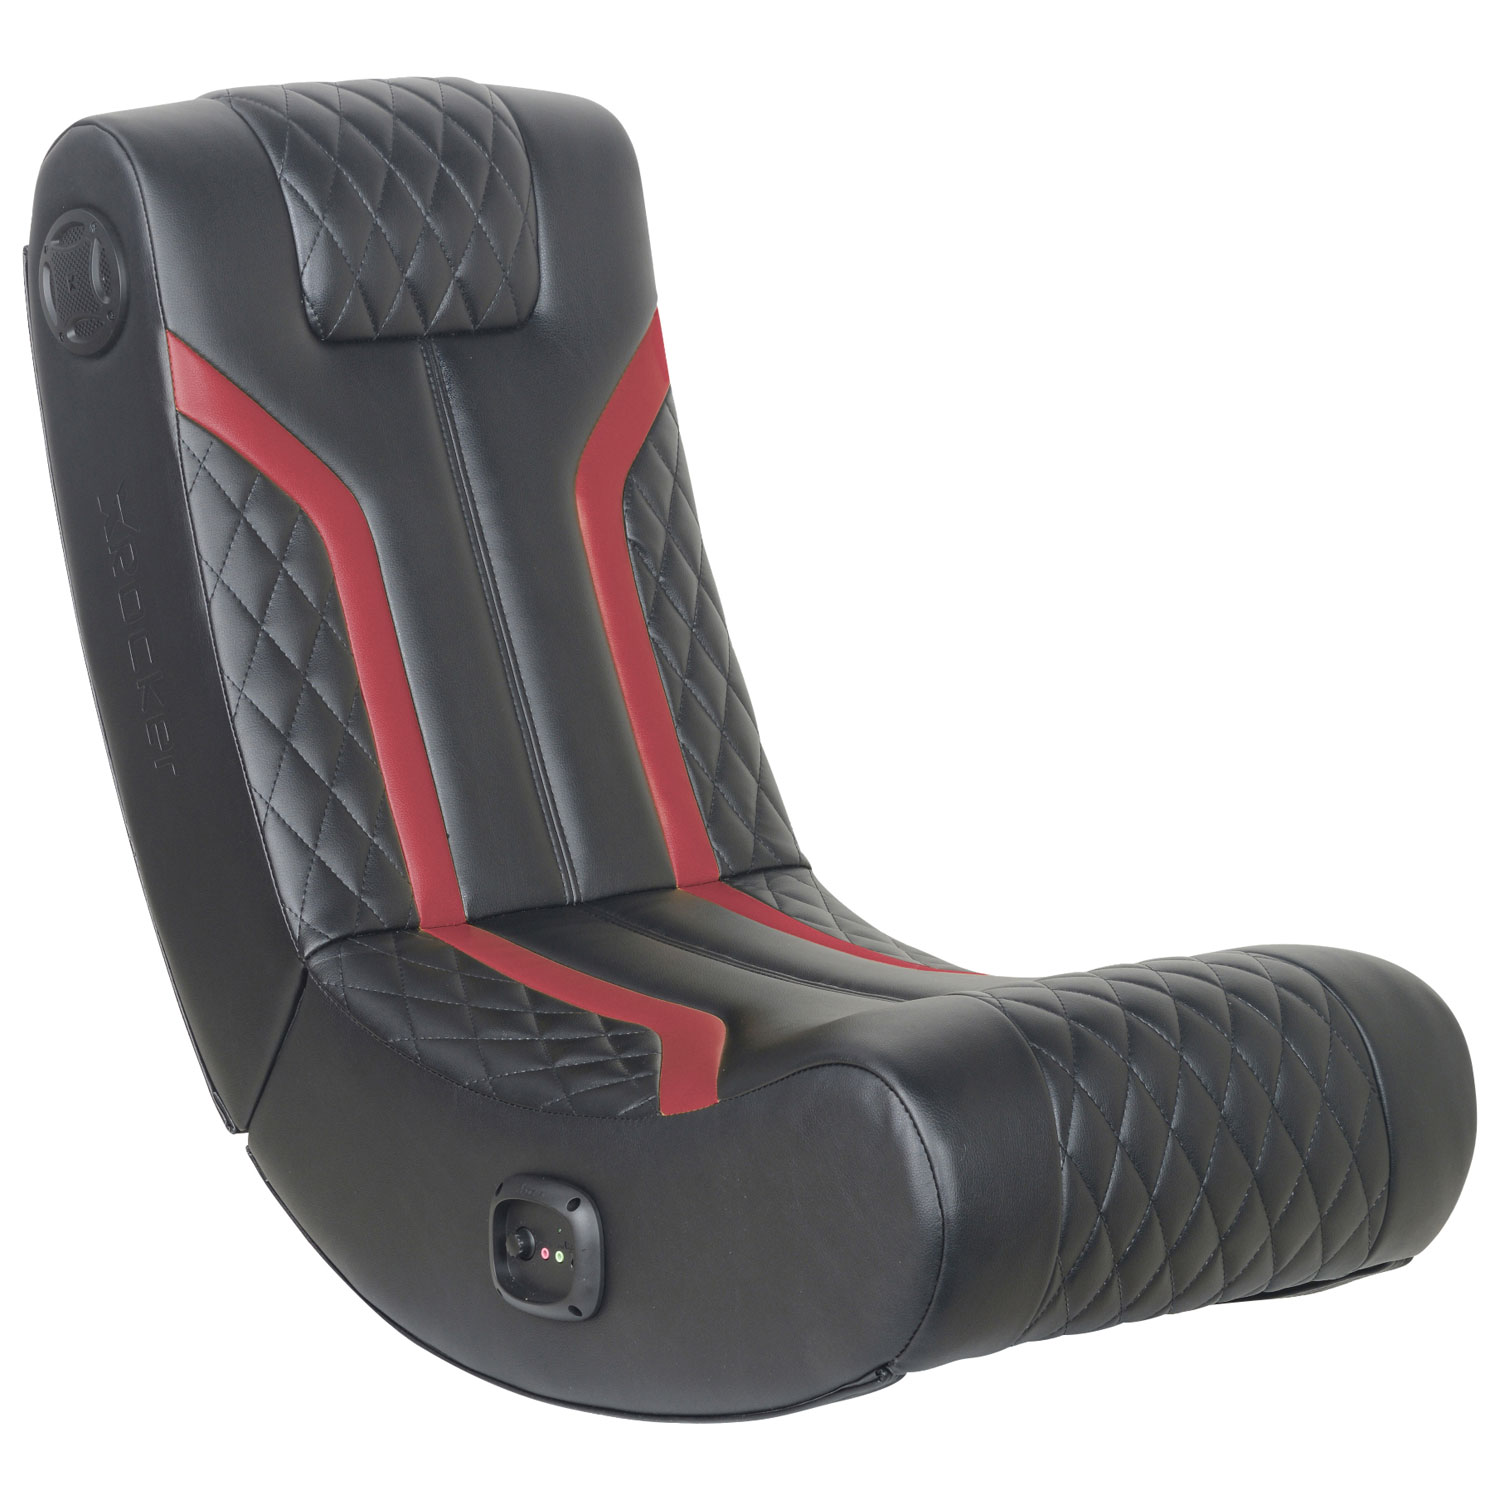 X Rocker Lux Floor Rocker Gaming Chair With Built In Speaker Red Black Best Buy Canada